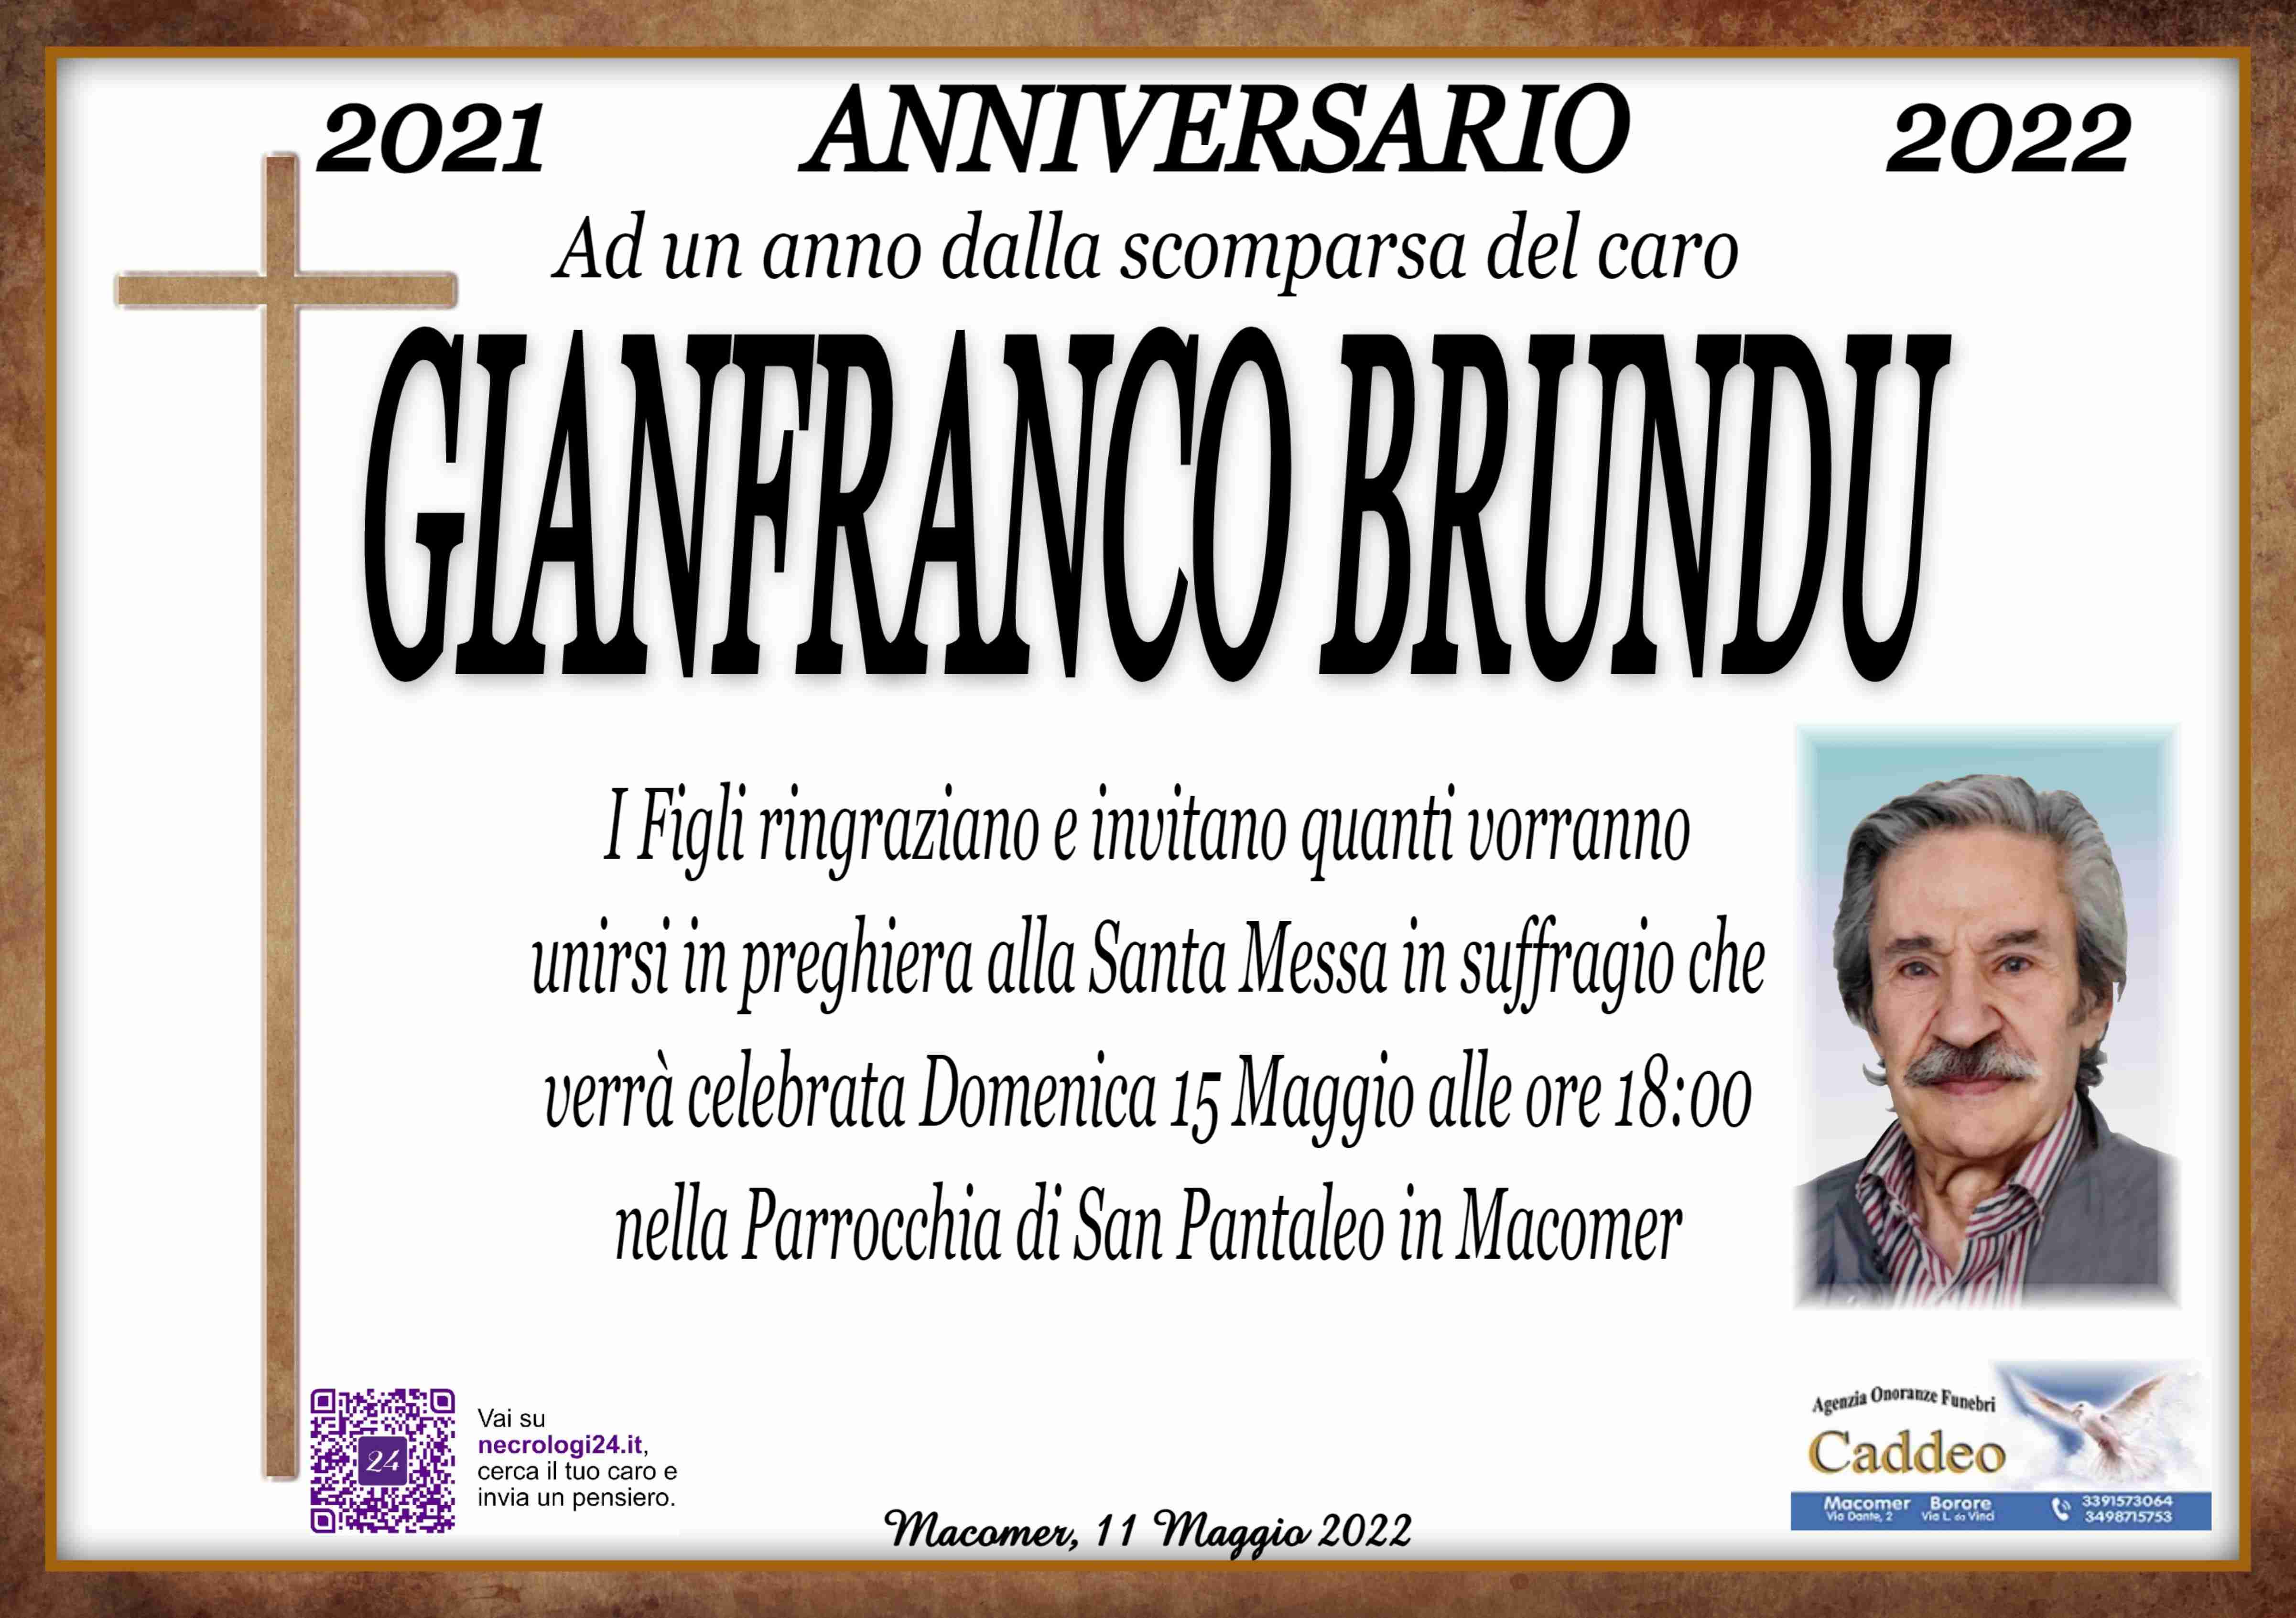 Giovanni Francesco Brundu